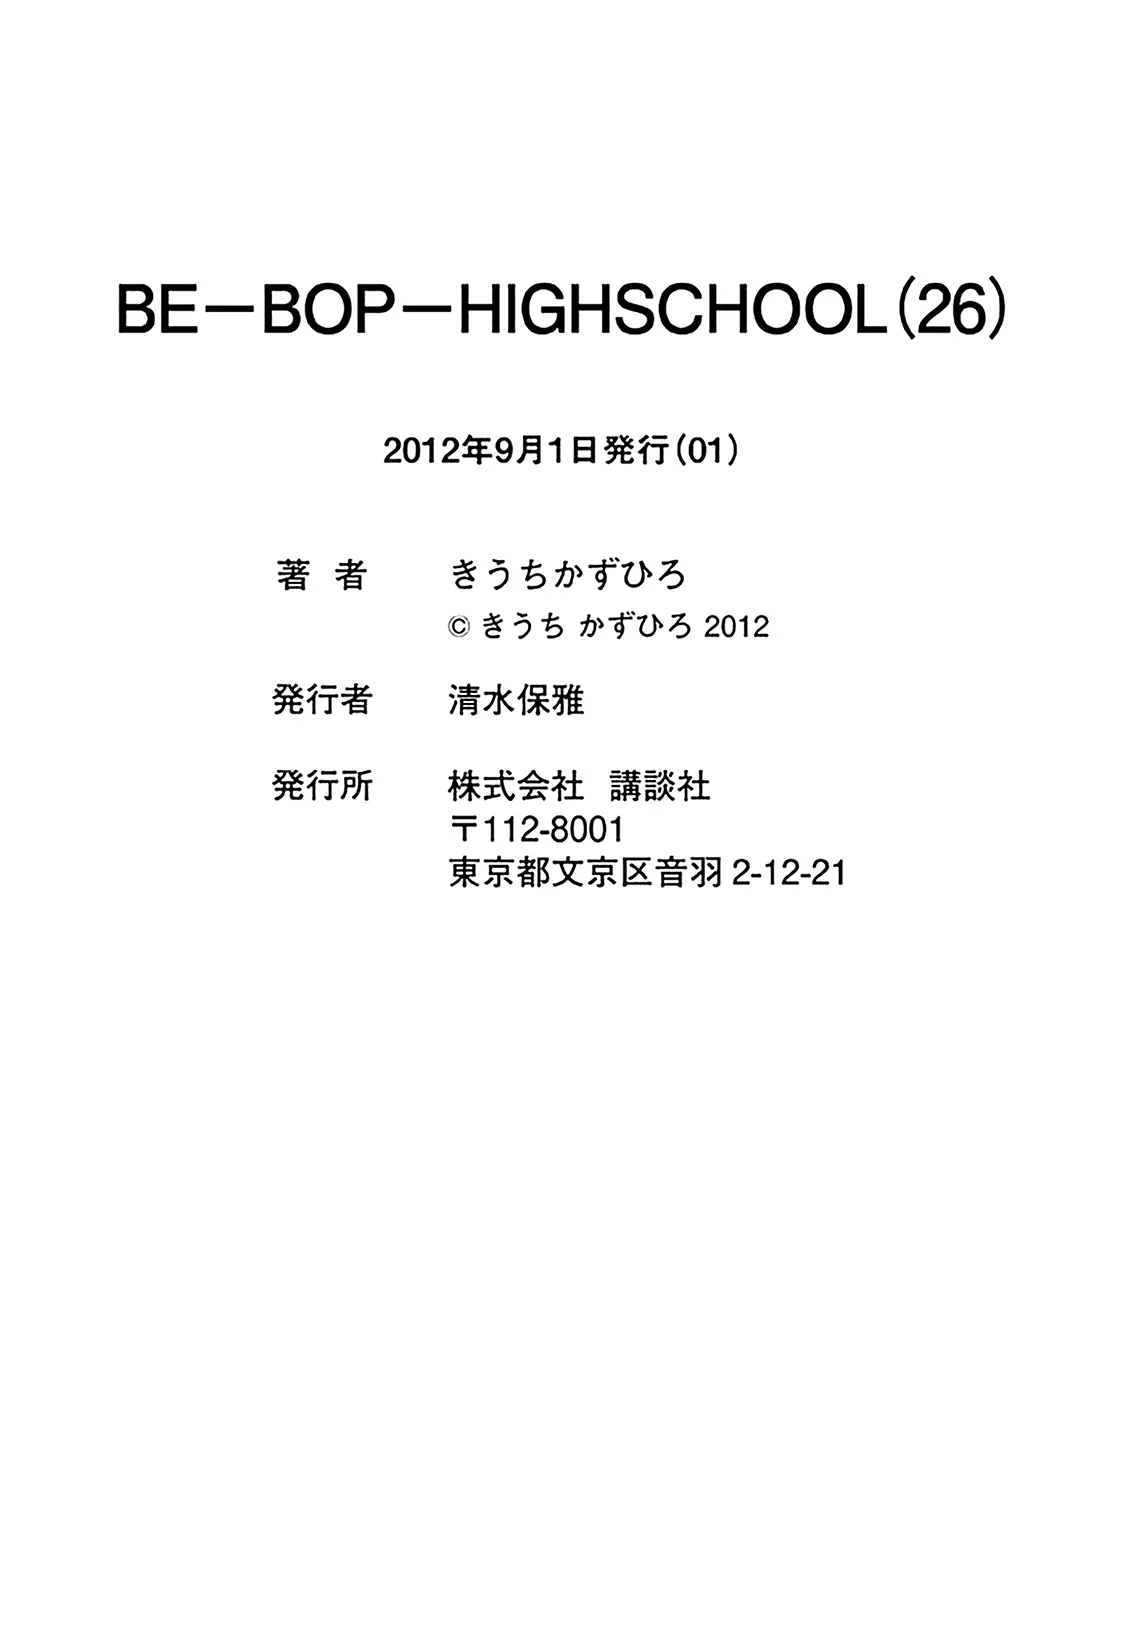 Be-Bop-Highschool - 179 page 30-3812e908